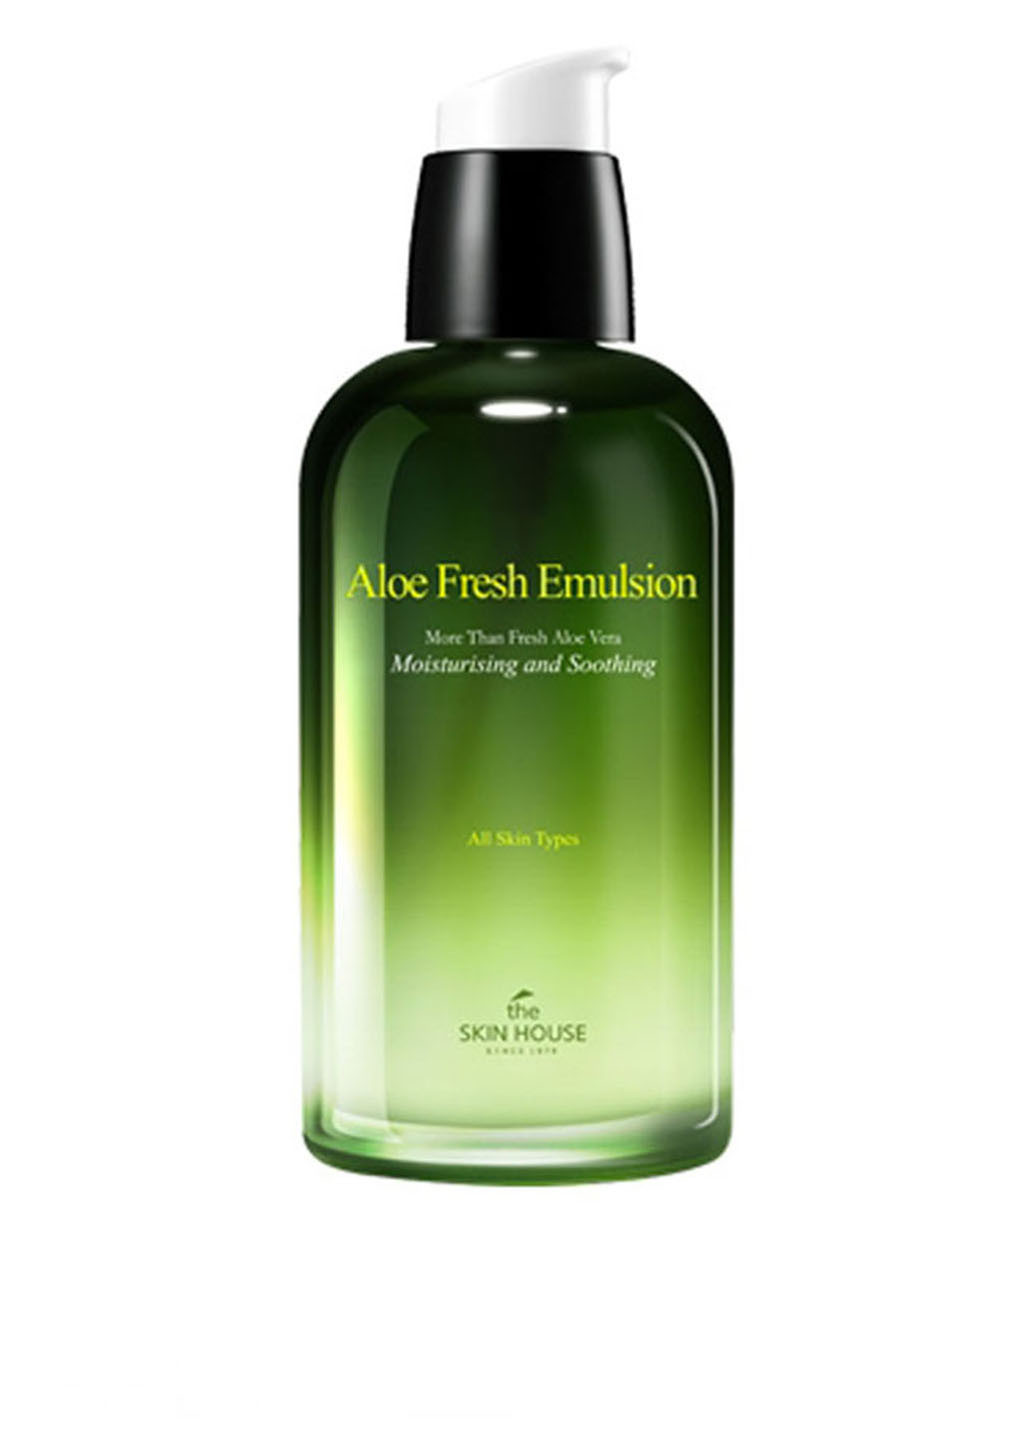 Увлажняющая эмульсия с экстрактом алоэ Aloe Fresh Emulsion, 130 мл The Skin House